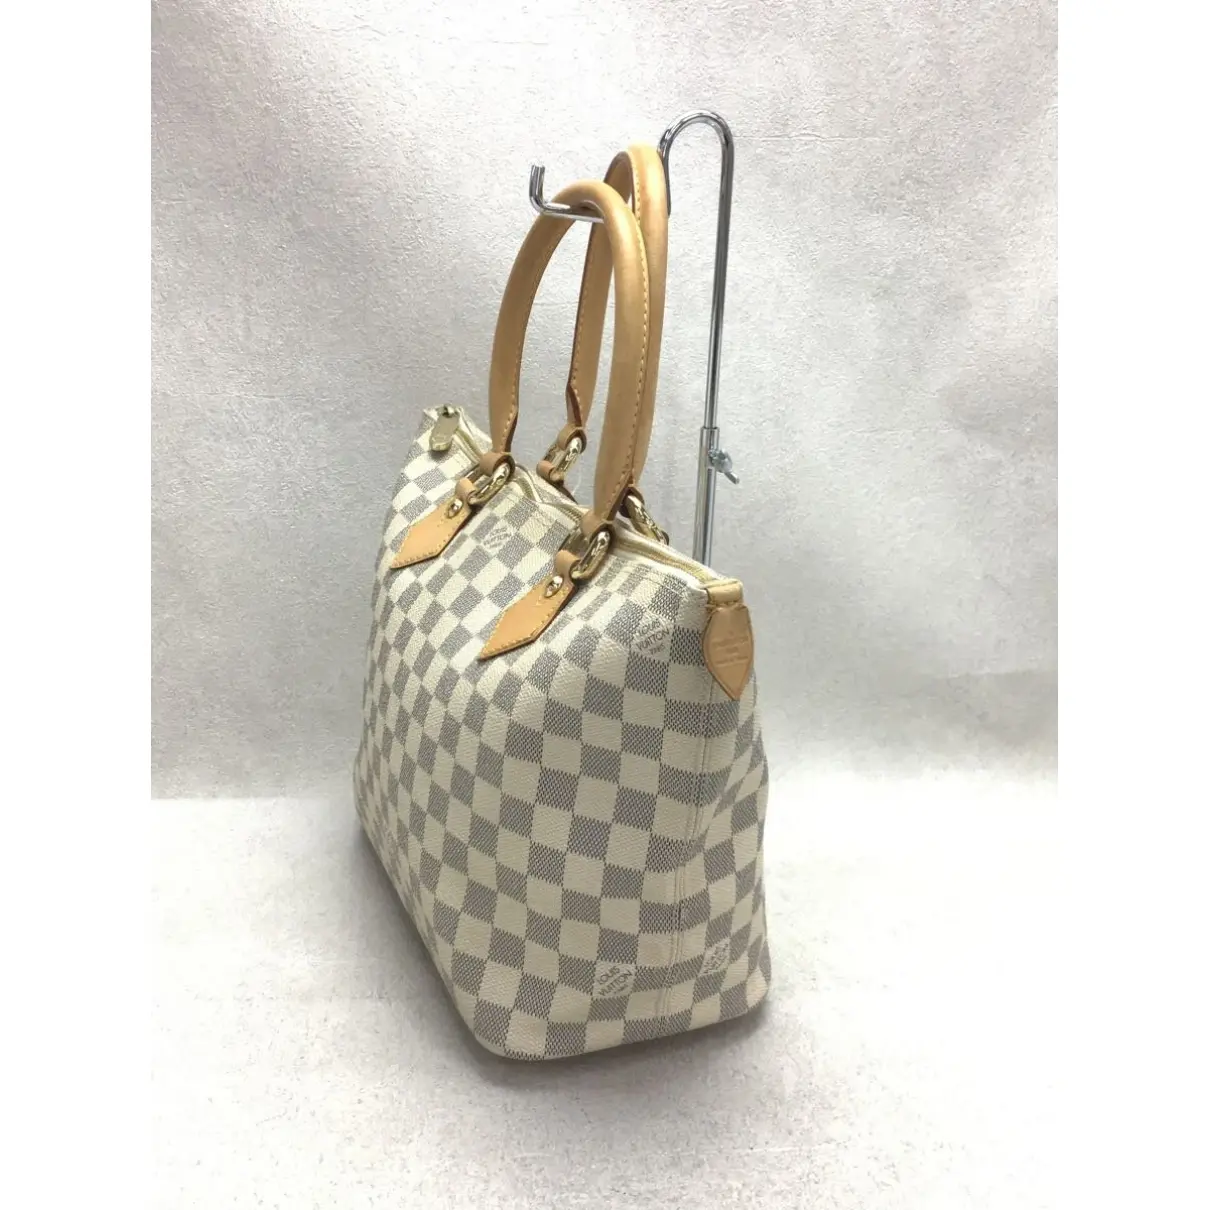 Buy Louis Vuitton Saleya leather handbag online